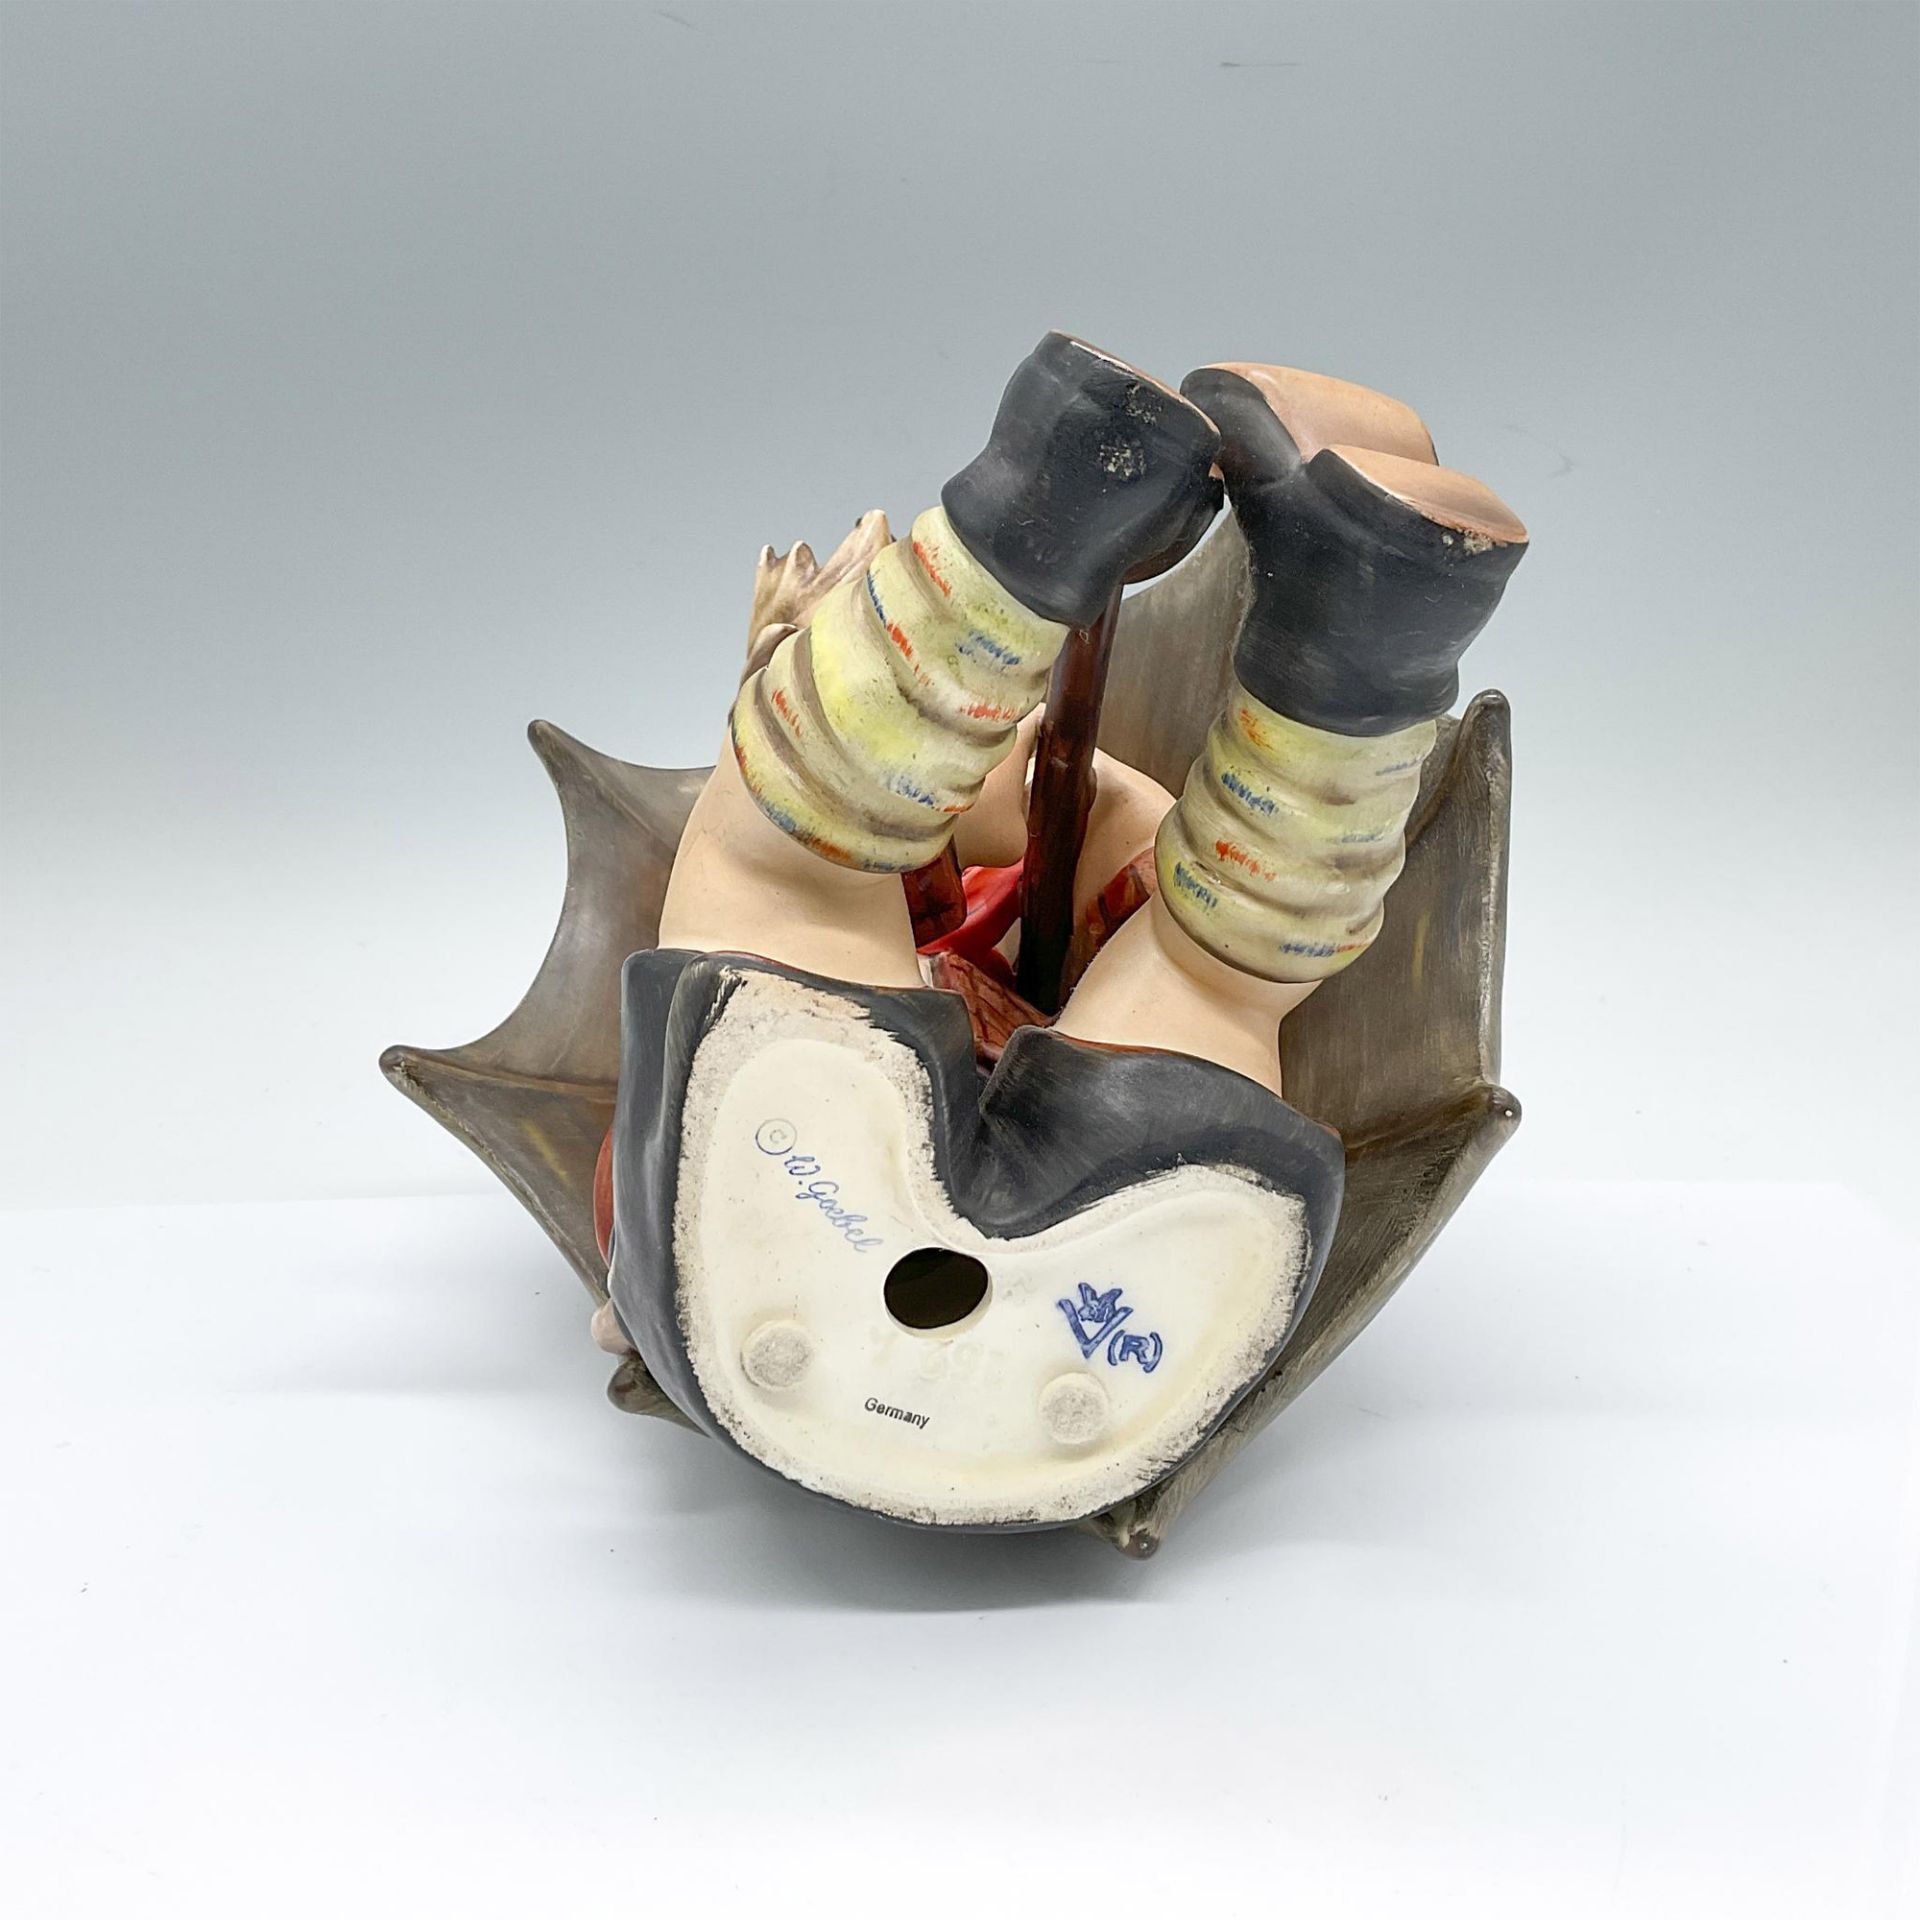 Goebel Hummel Porcelain Figurine, Umbrella Boy - Image 3 of 3